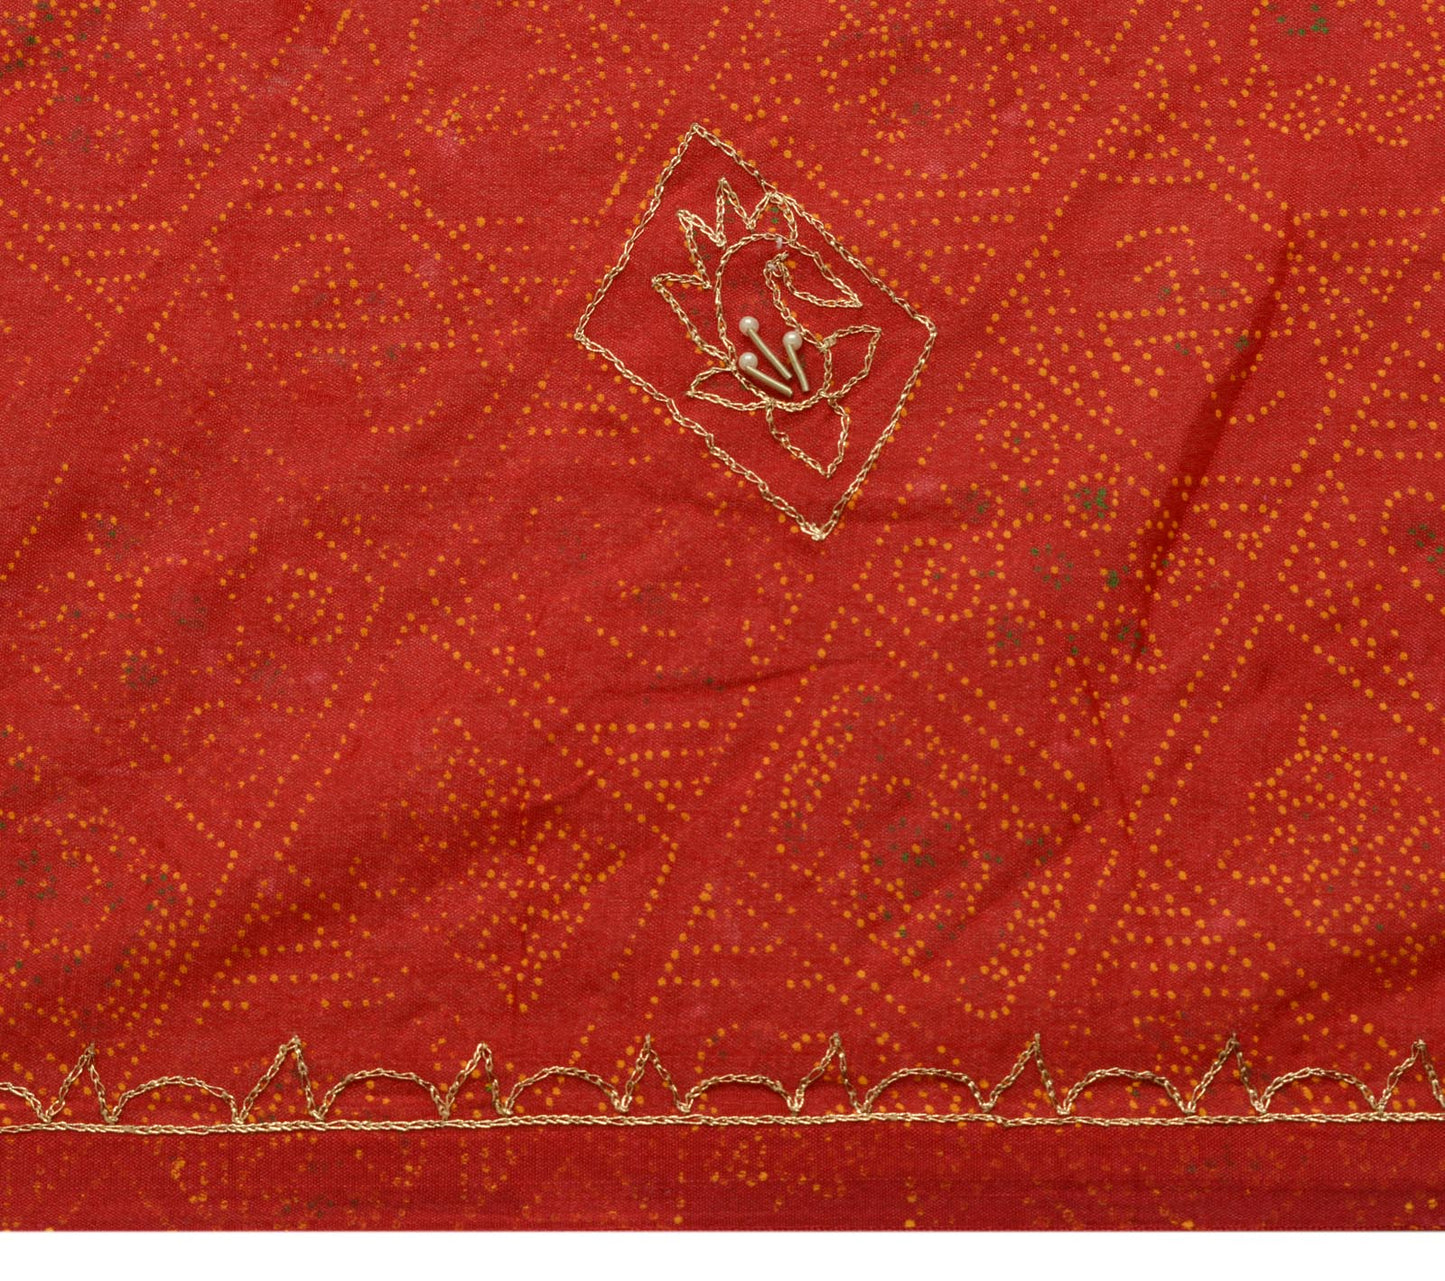 Sushila Vintage Deep Red Dupatta Art Silk Beaded Printed Long Stole Scarves